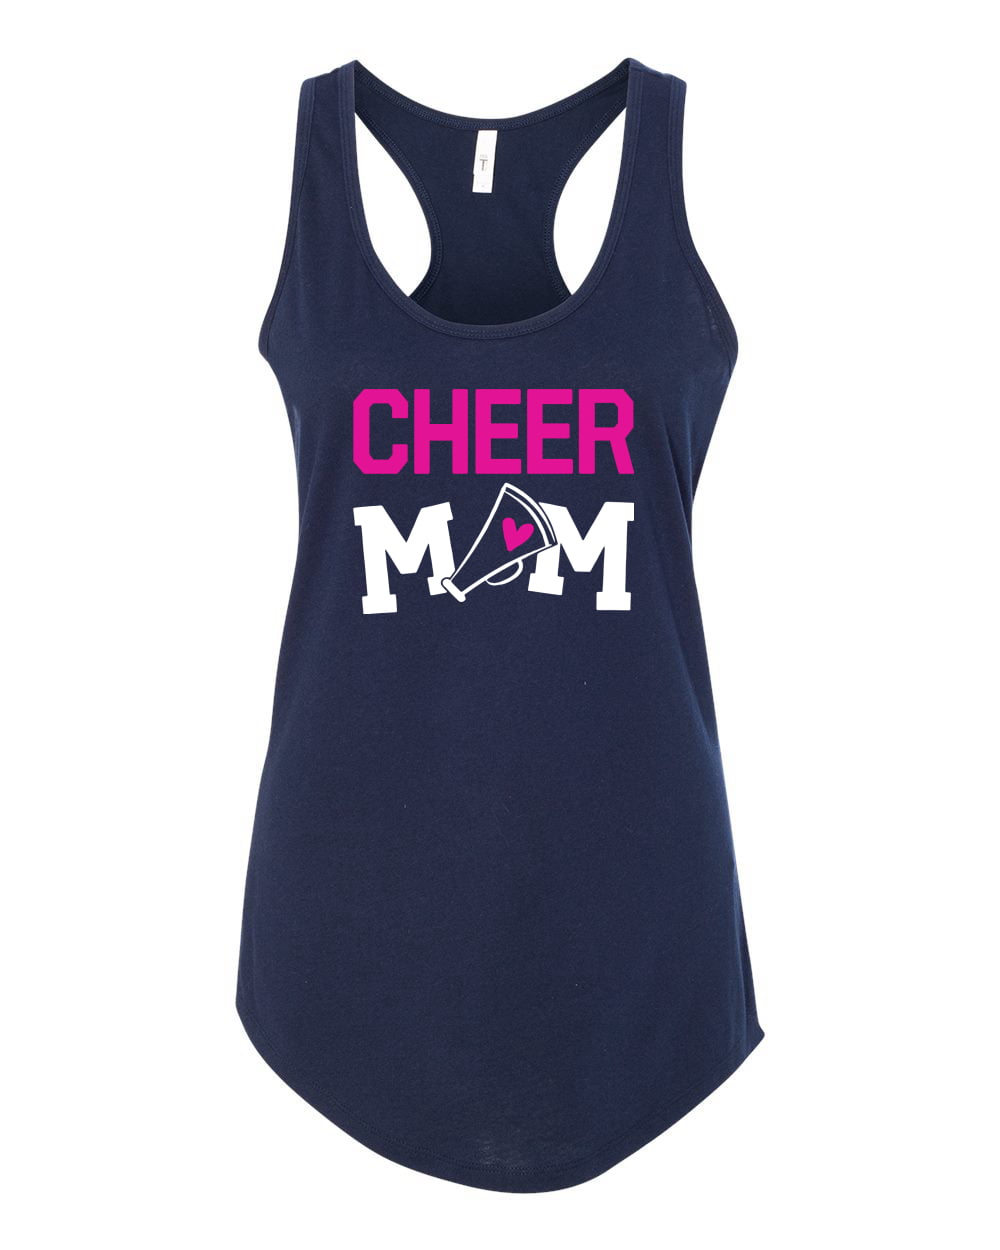 Cheer Mom Kids Super-Fan Love Pink Heart  Womens Sports Jersey Racerback  Tank Top, Navy, Small 